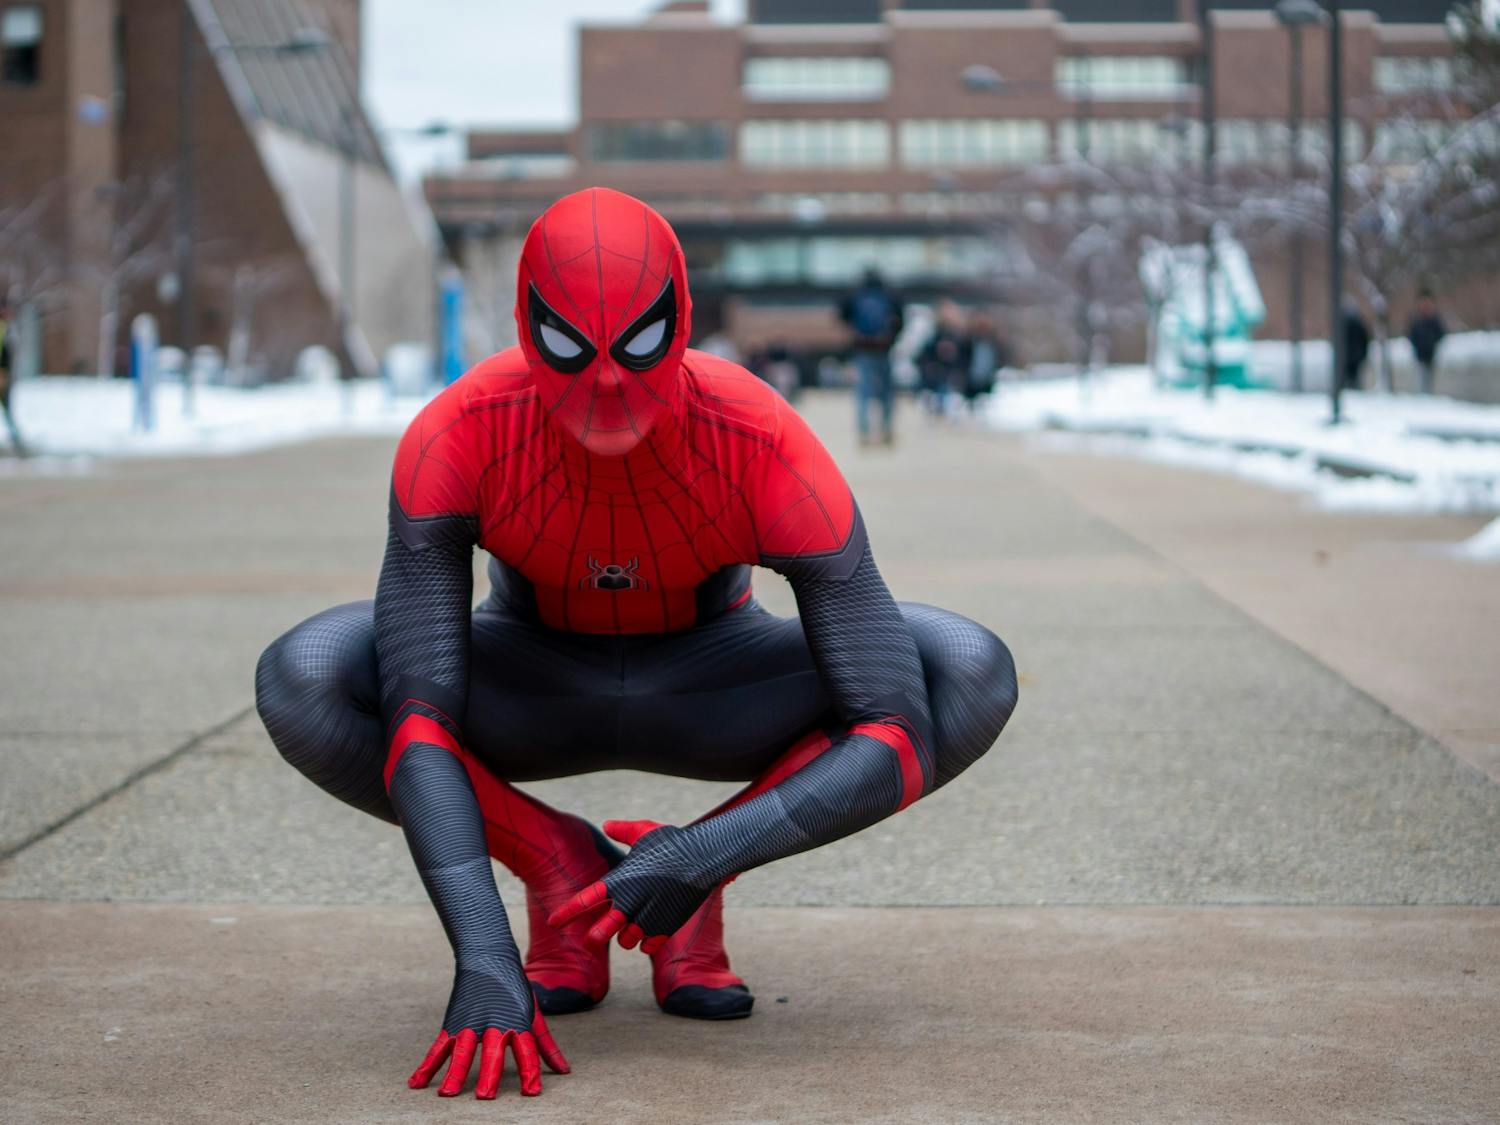 UB Spider-Man recreates iconic Spider-Man poses outside Student Union.